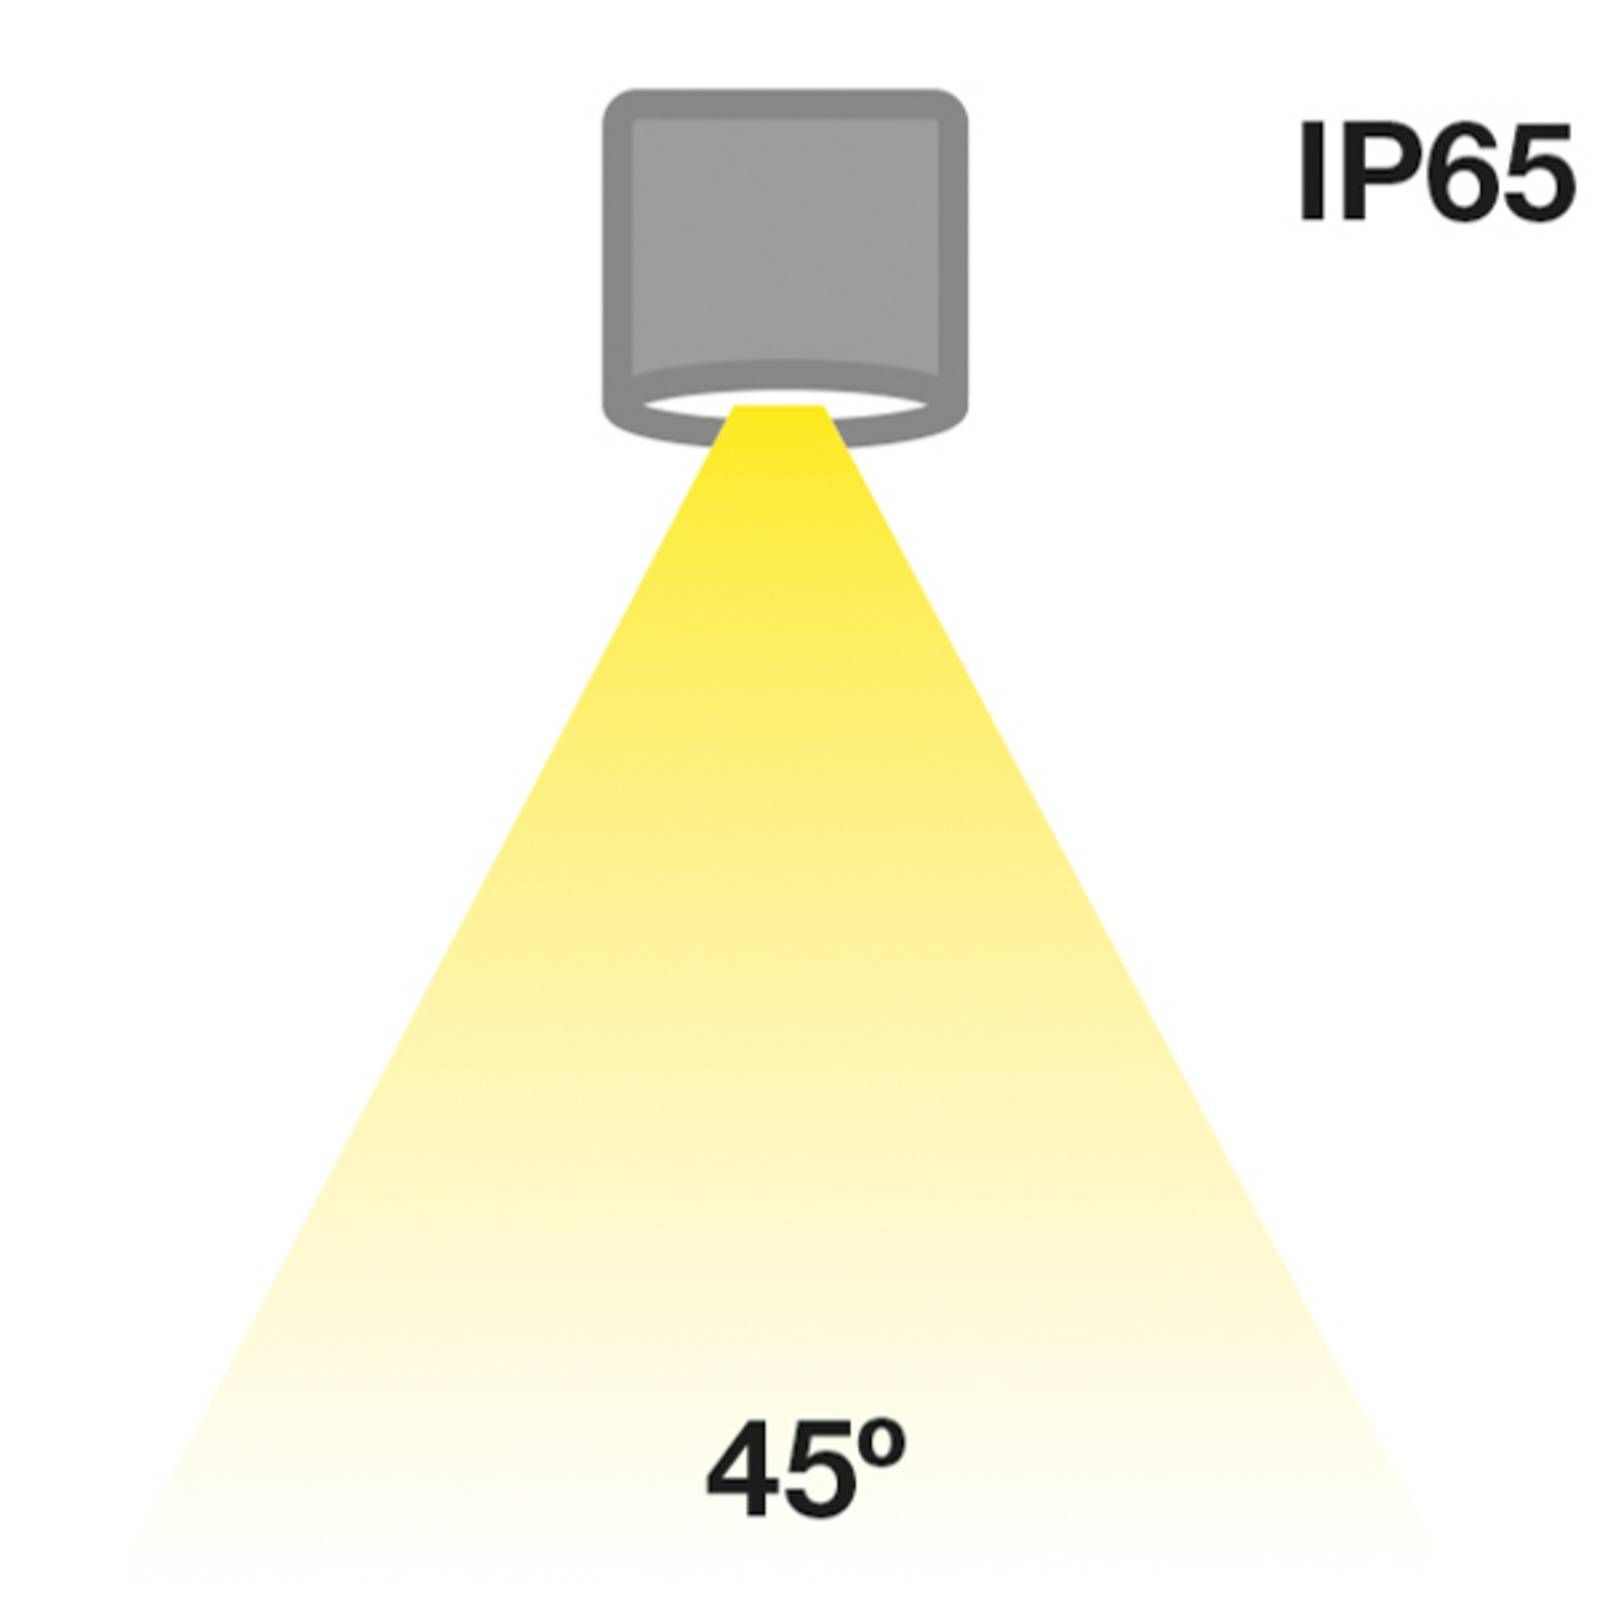 The Light Group SLC MiniOne Fixed LED downlight IP65 čierna 927, Obývacia izba / jedáleň, hliník, 3W